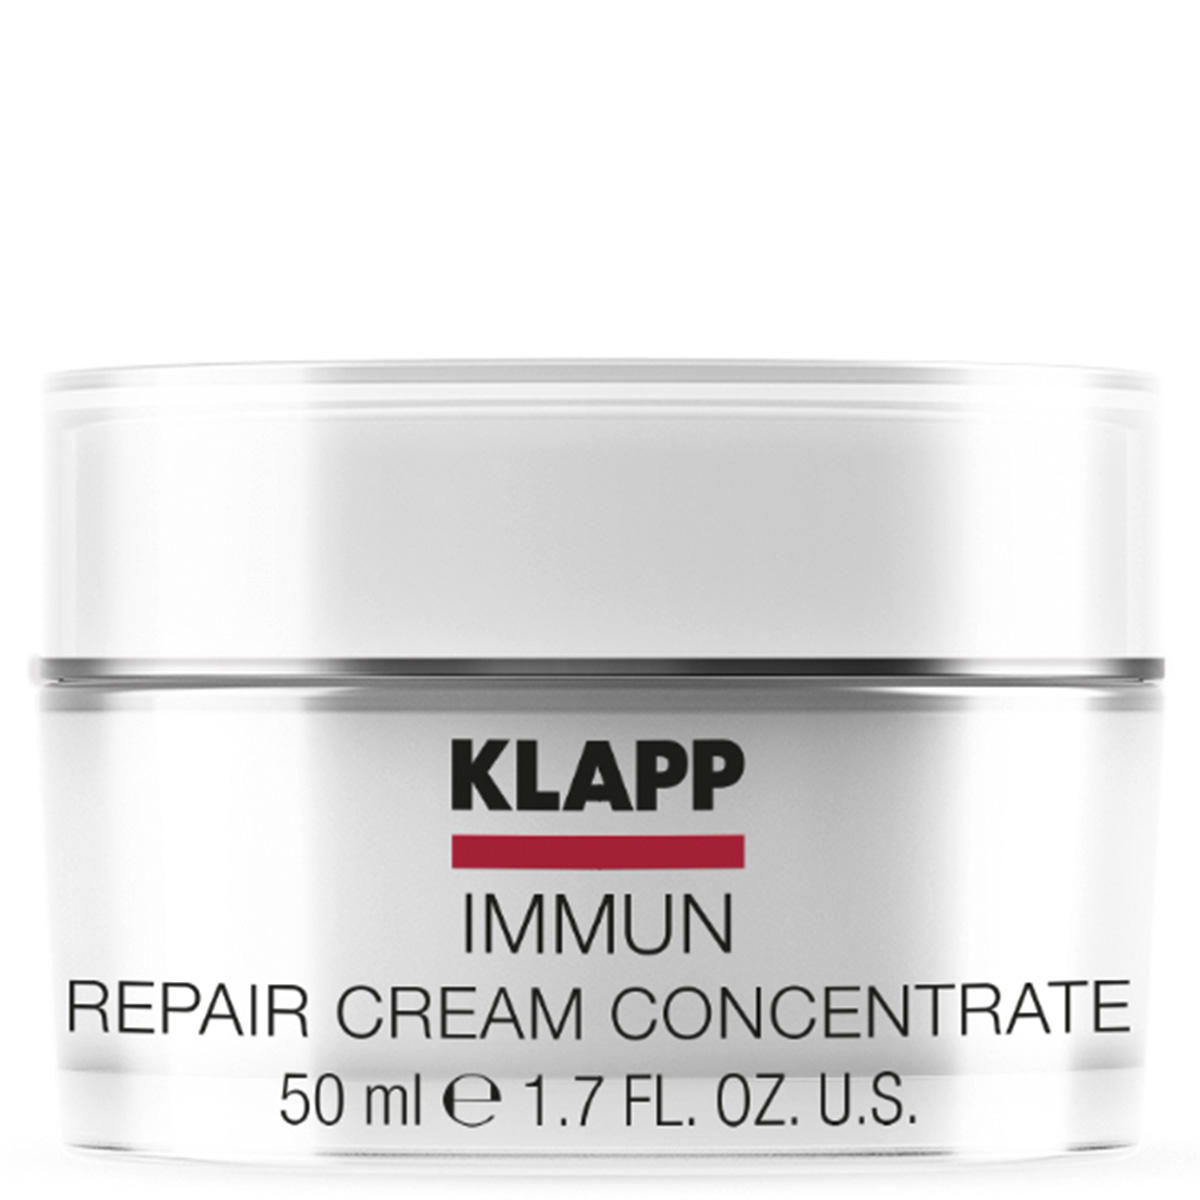 KLAPP IMMUN Repair Cream Concentrate 50 ml - 1